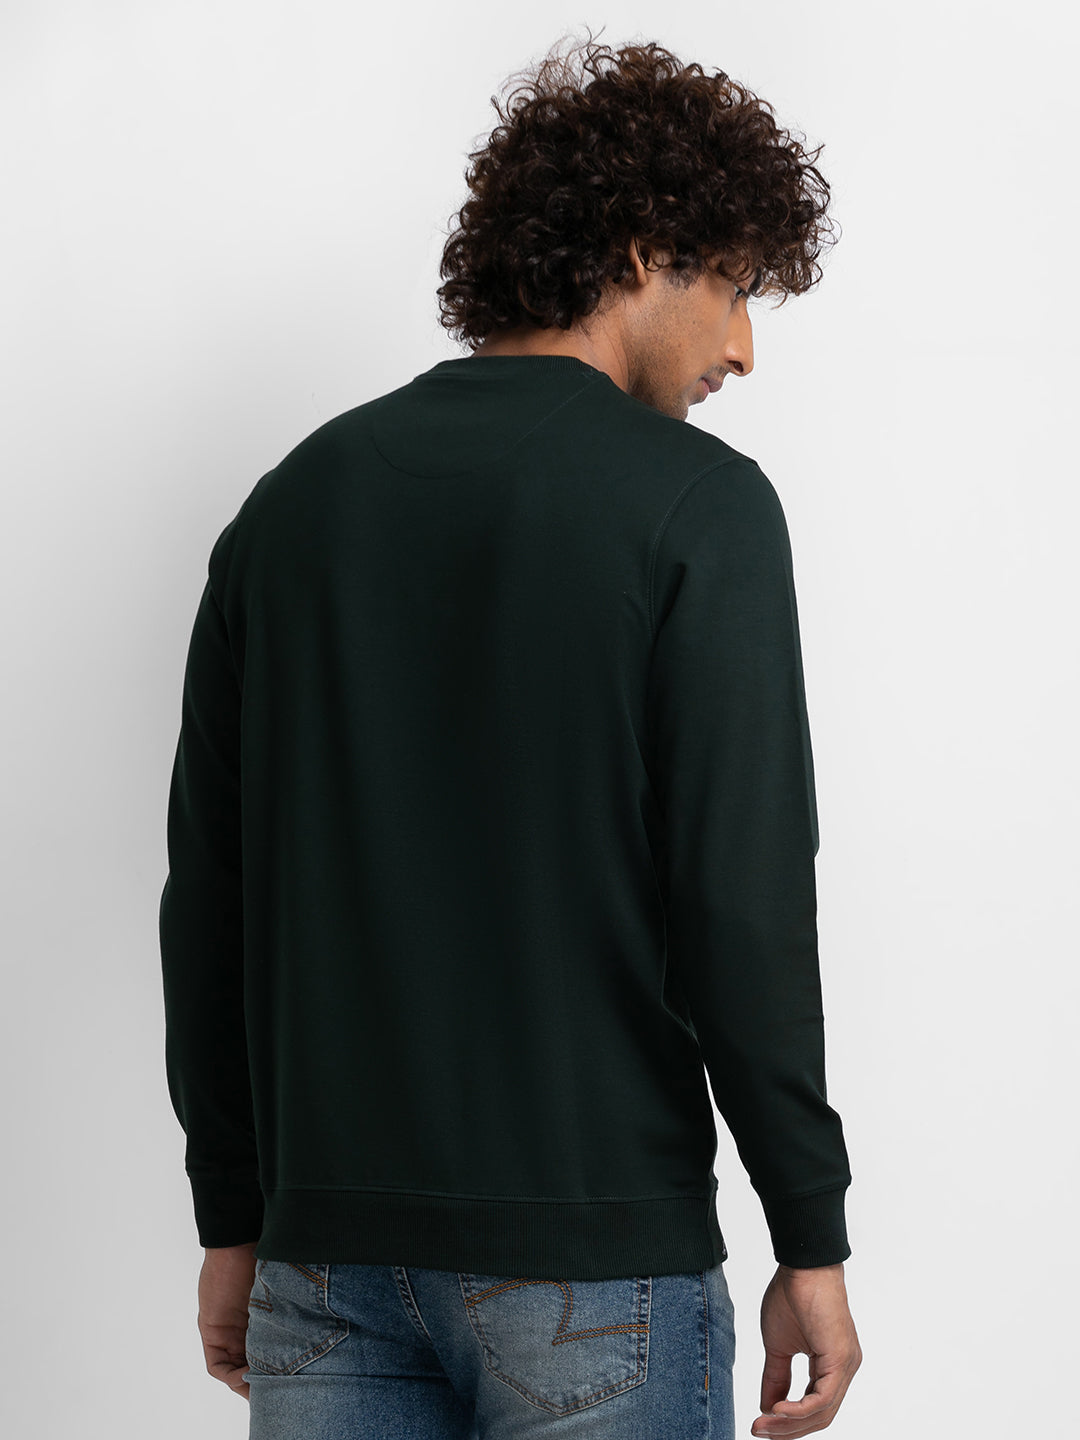 Spykar Bottle Green Cotton Full Sleeve Round Neck Sweatshirt For Men